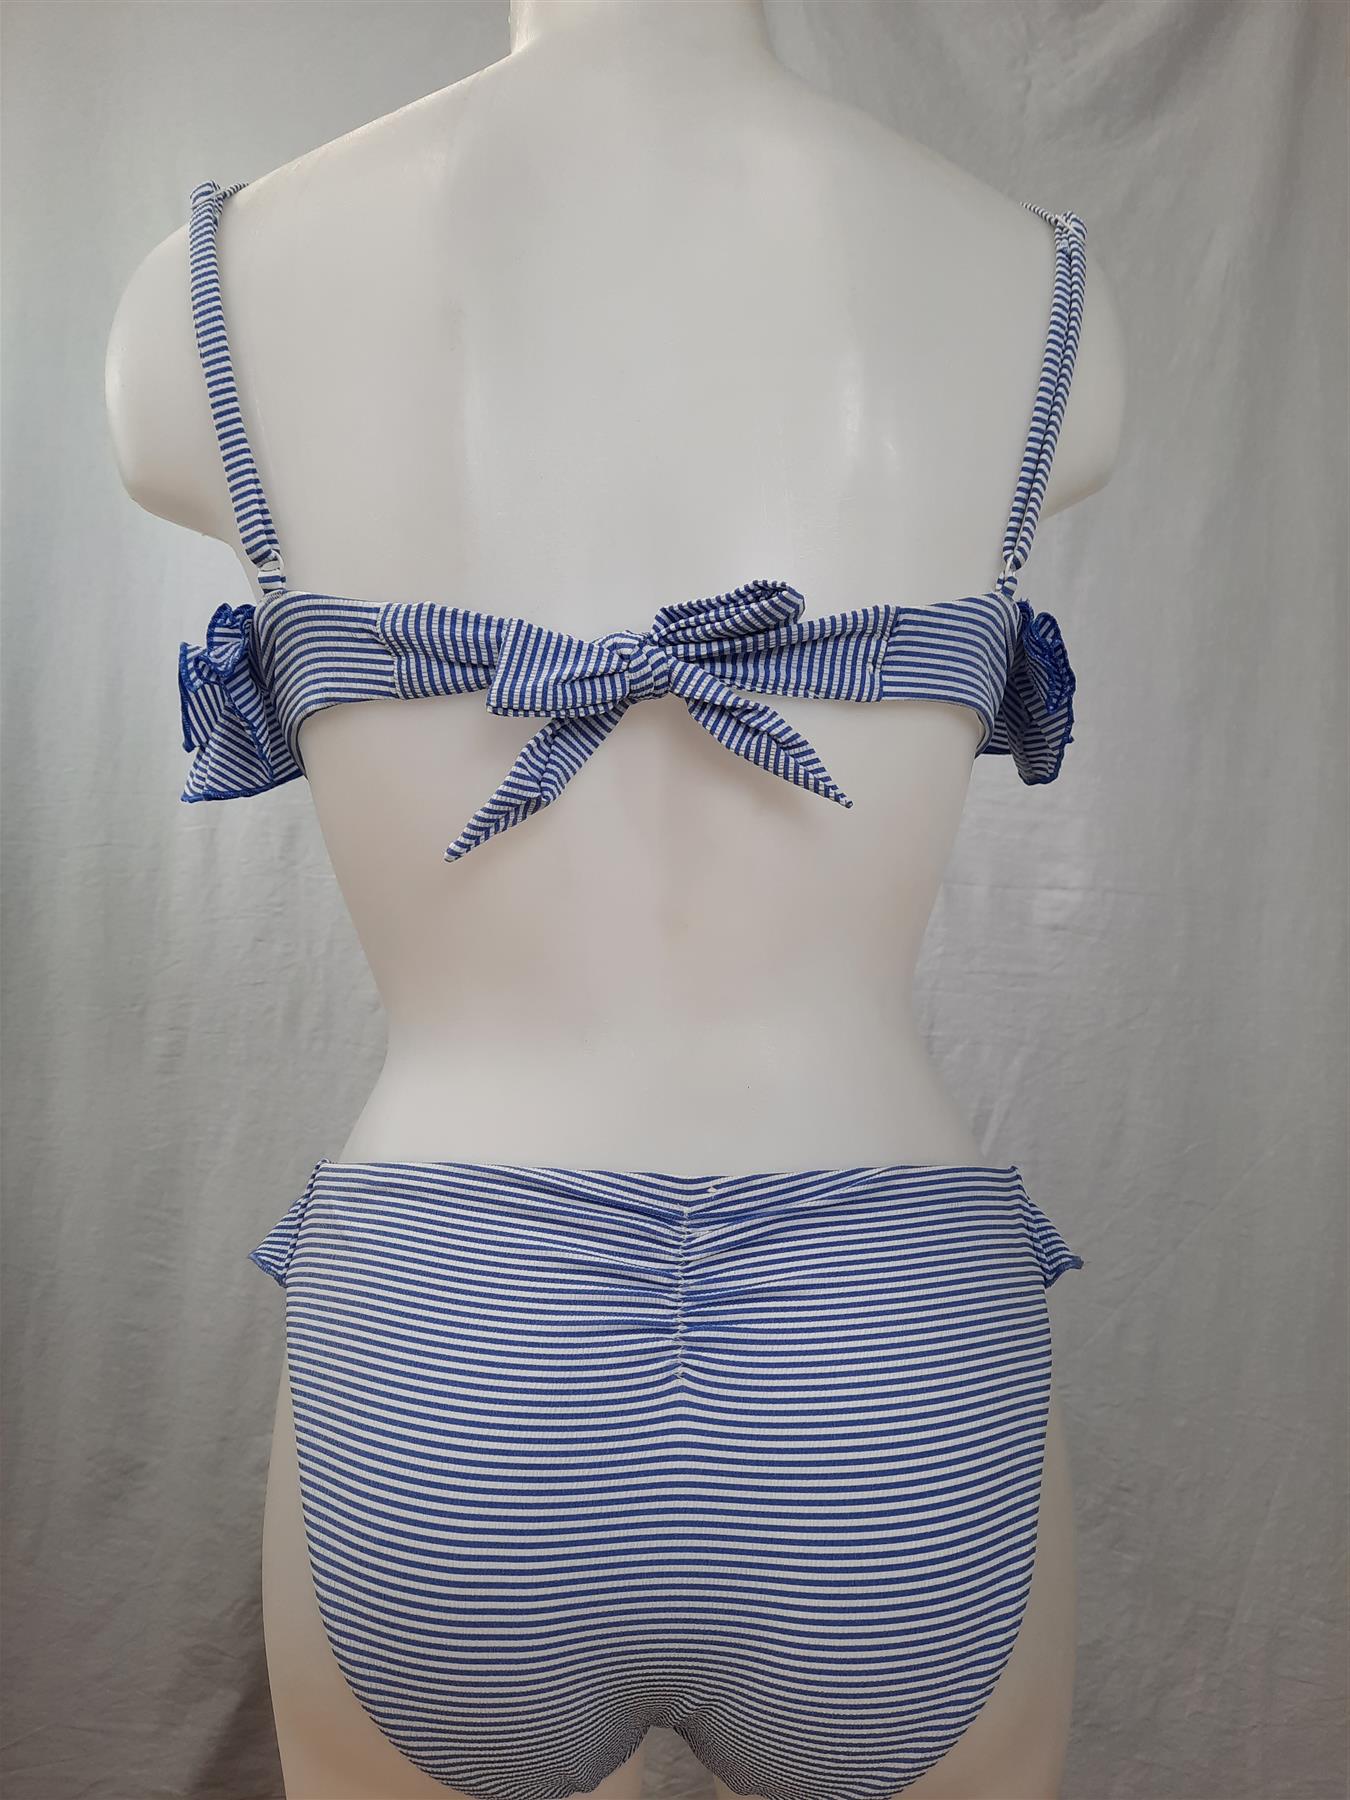 Designer Bikini Full Set Top & Bottoms Frill Stripe Non-Wired Lined Brand New